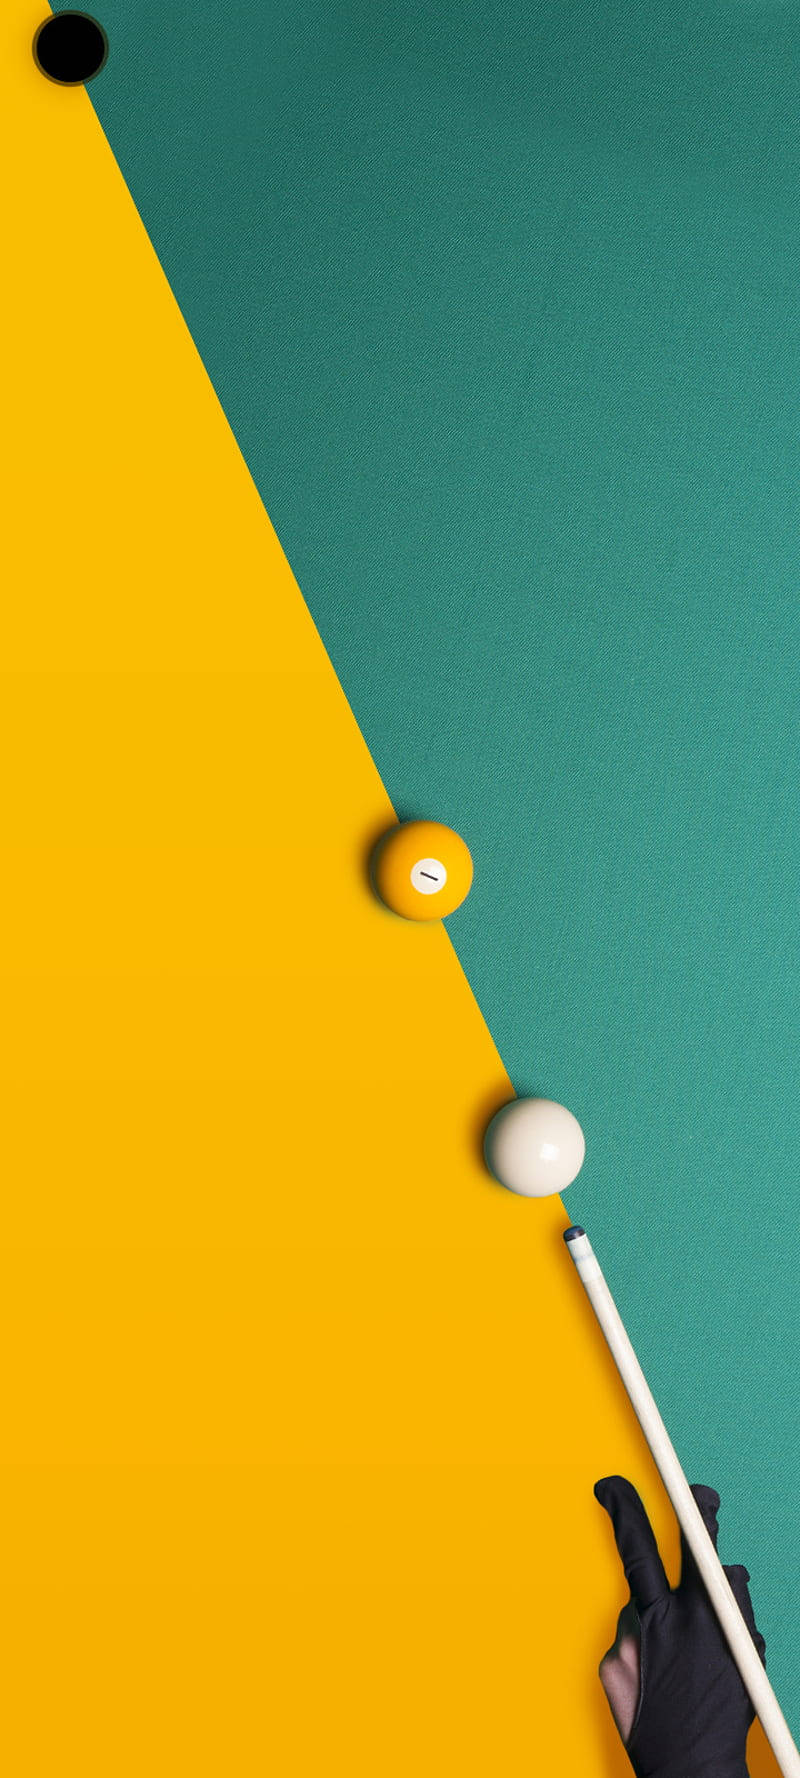 Billiards Punch Hole Wallpaper